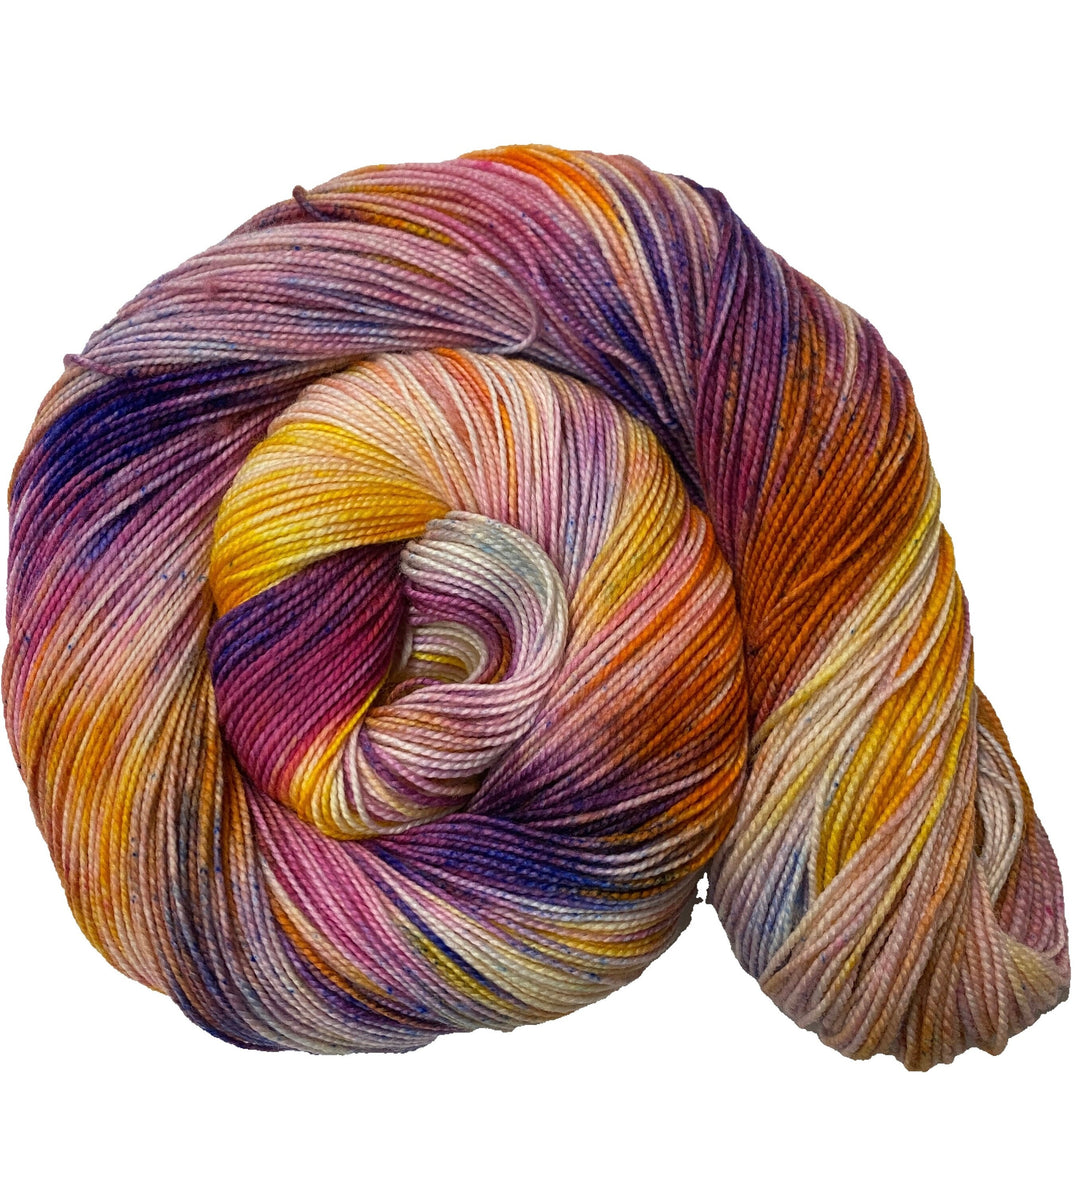 Litha - Hand dyed yarn - Mohair - Fingering - Sock - DK - Sport - Worsted - Bulky - Variegated yarn